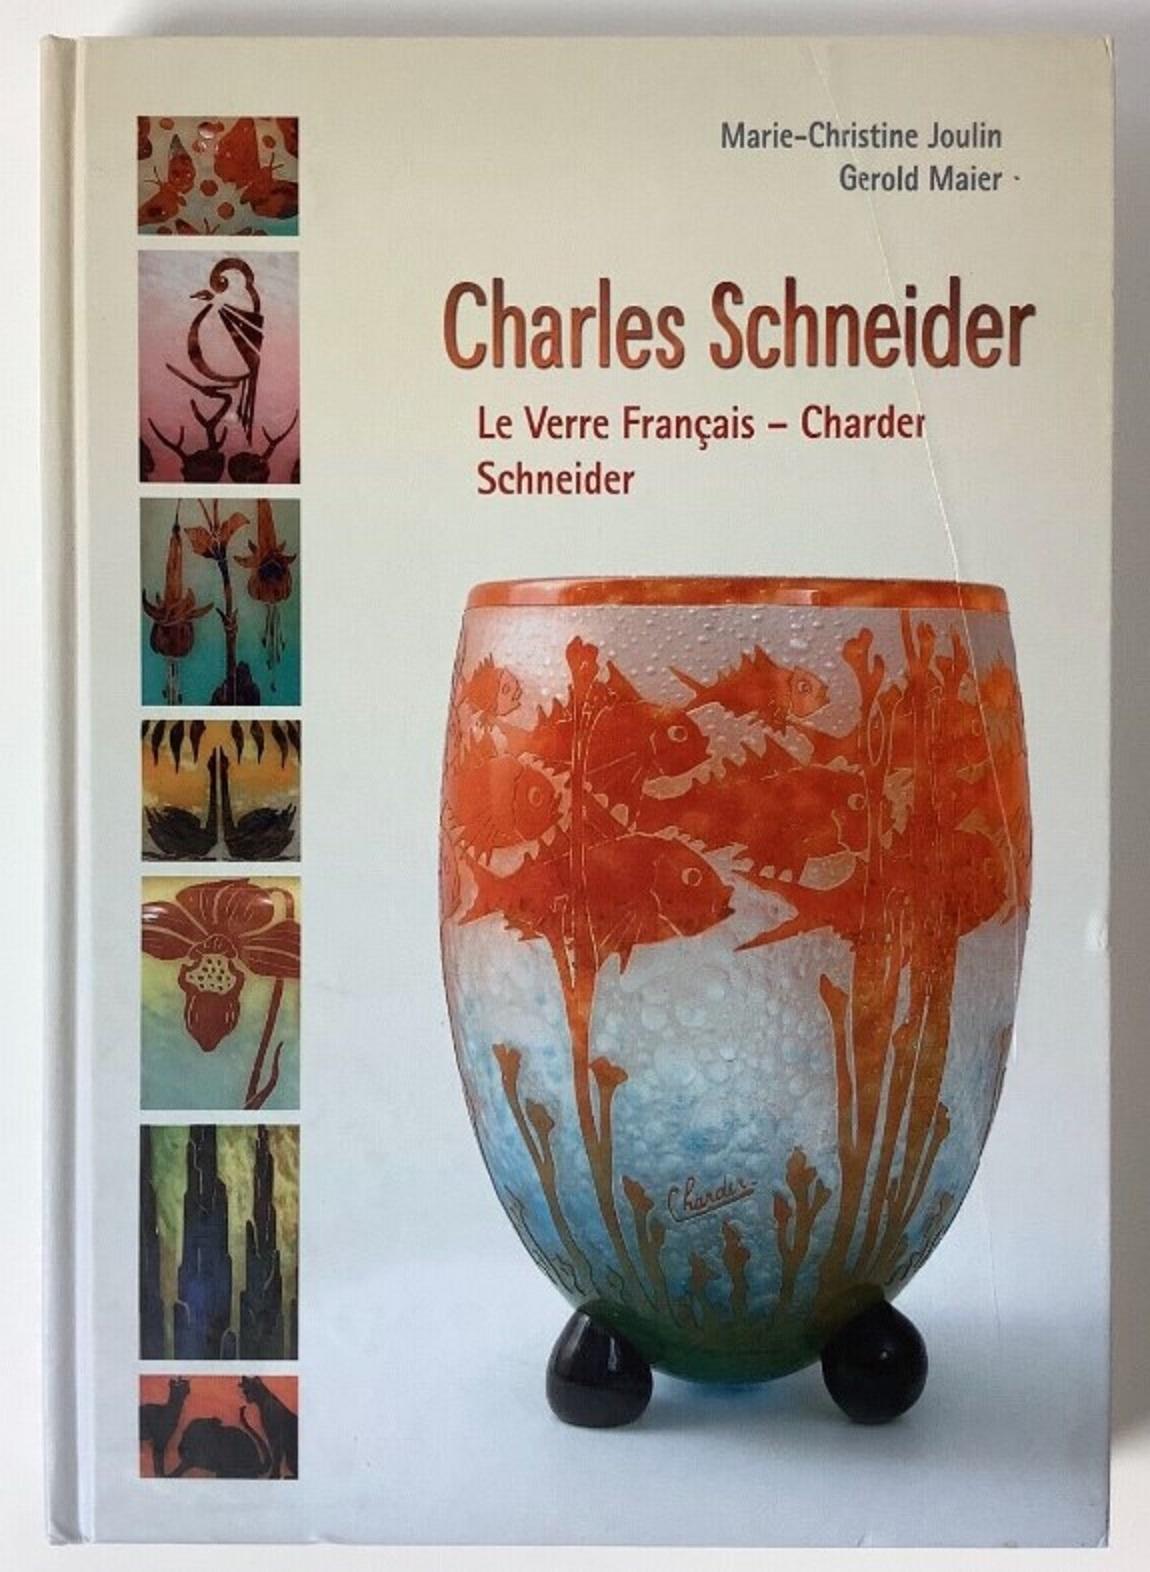 Art Nouveau Vase Sign: Le Verre Francais and french flag (mûriers rouges / Red Mulberrie) For Sale